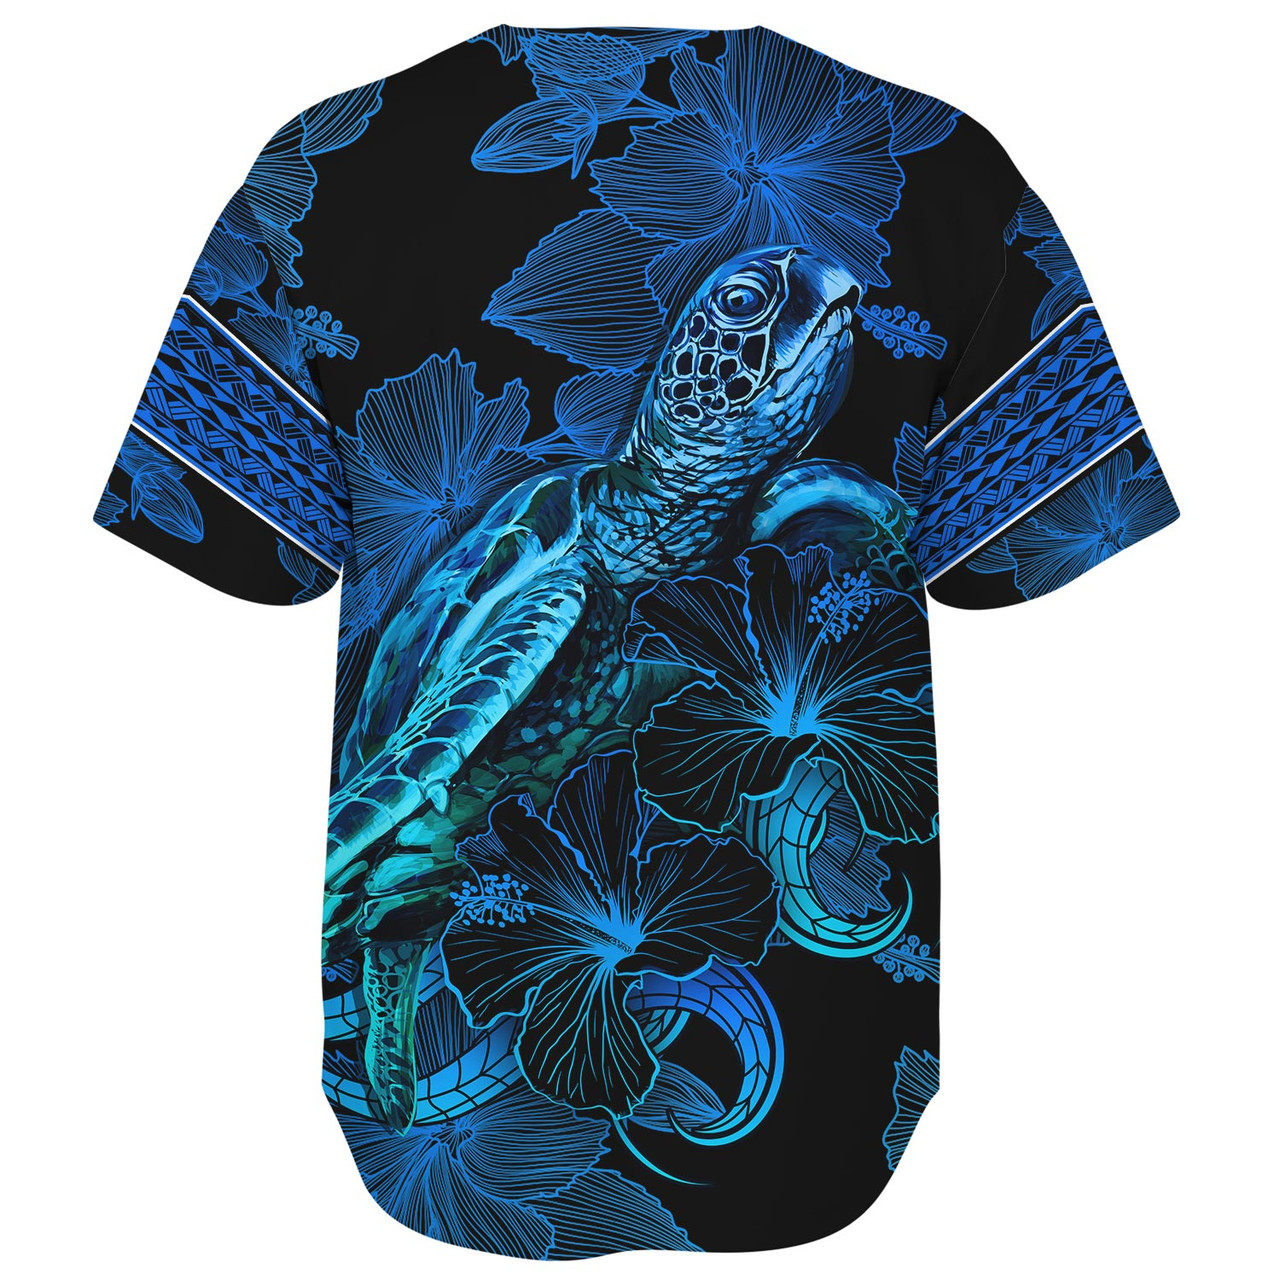 Tonga Baseball Shirt Sea Turtle With Blooming Hibiscus Flowers Tribal Blue